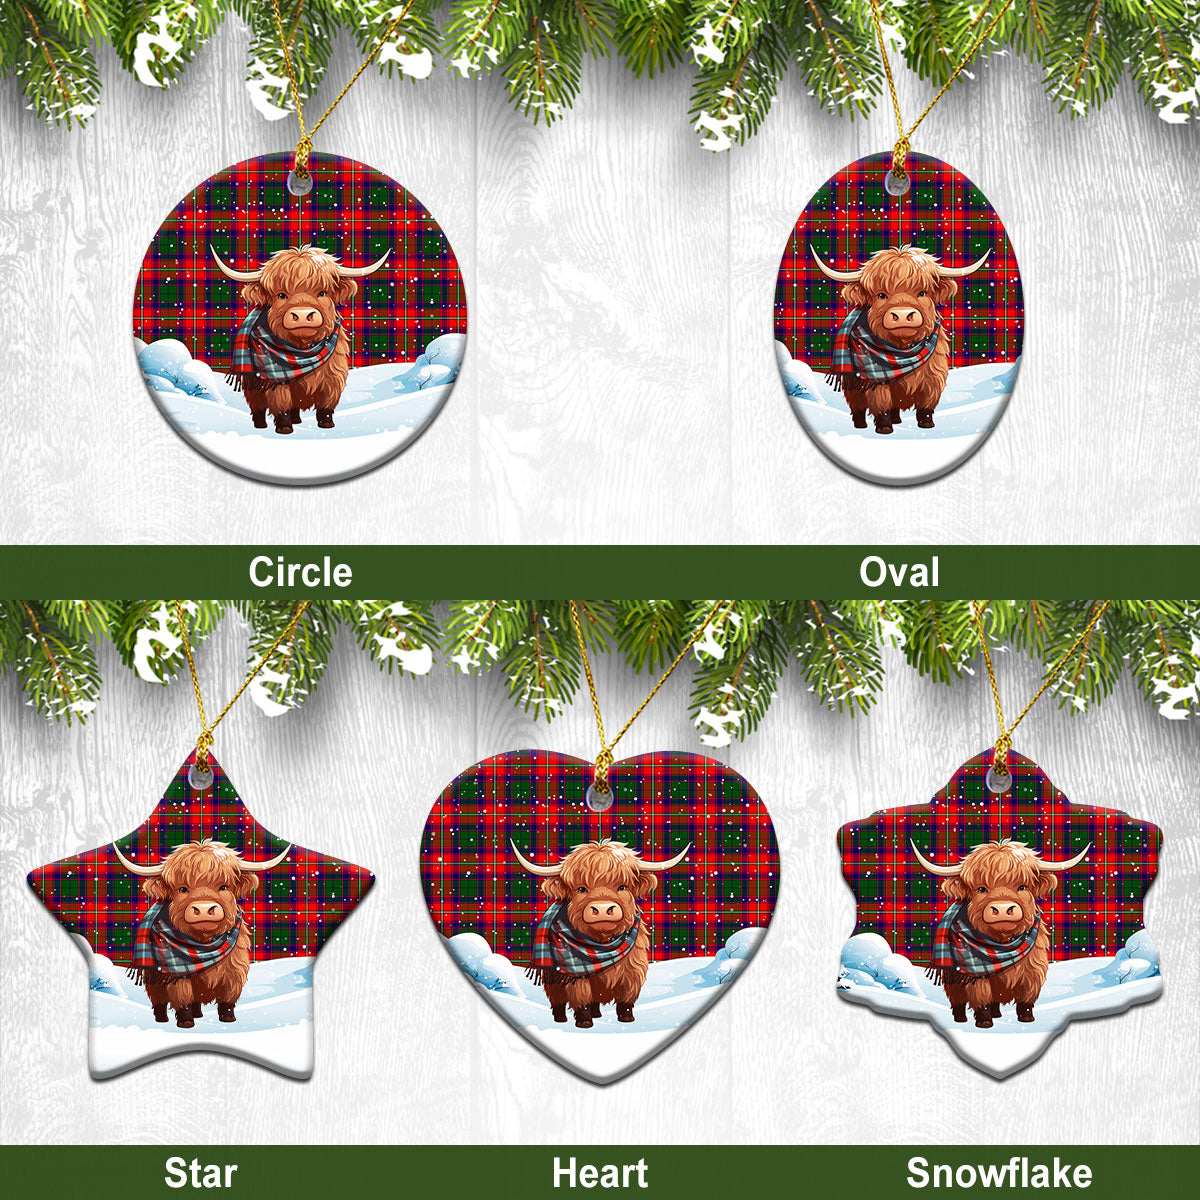 Charteris (Earl of Wemyss) Tartan Christmas Ceramic Ornament - Highland Cows Snow Style